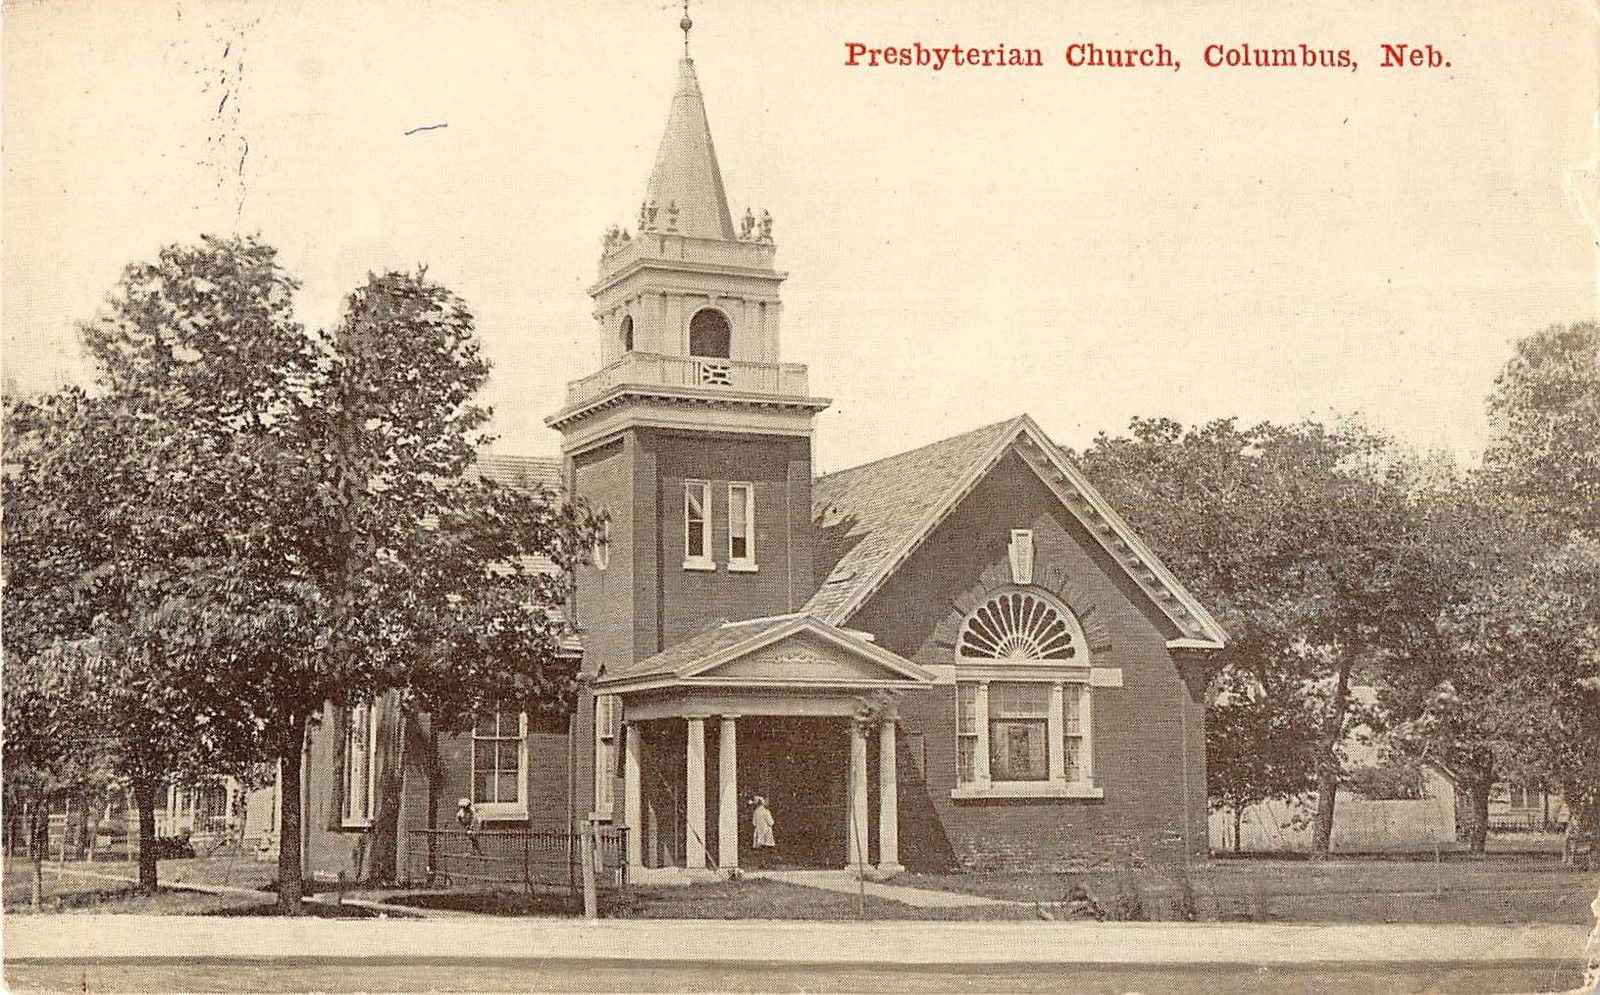 Presbyterian Church, Columbus, Nebraska